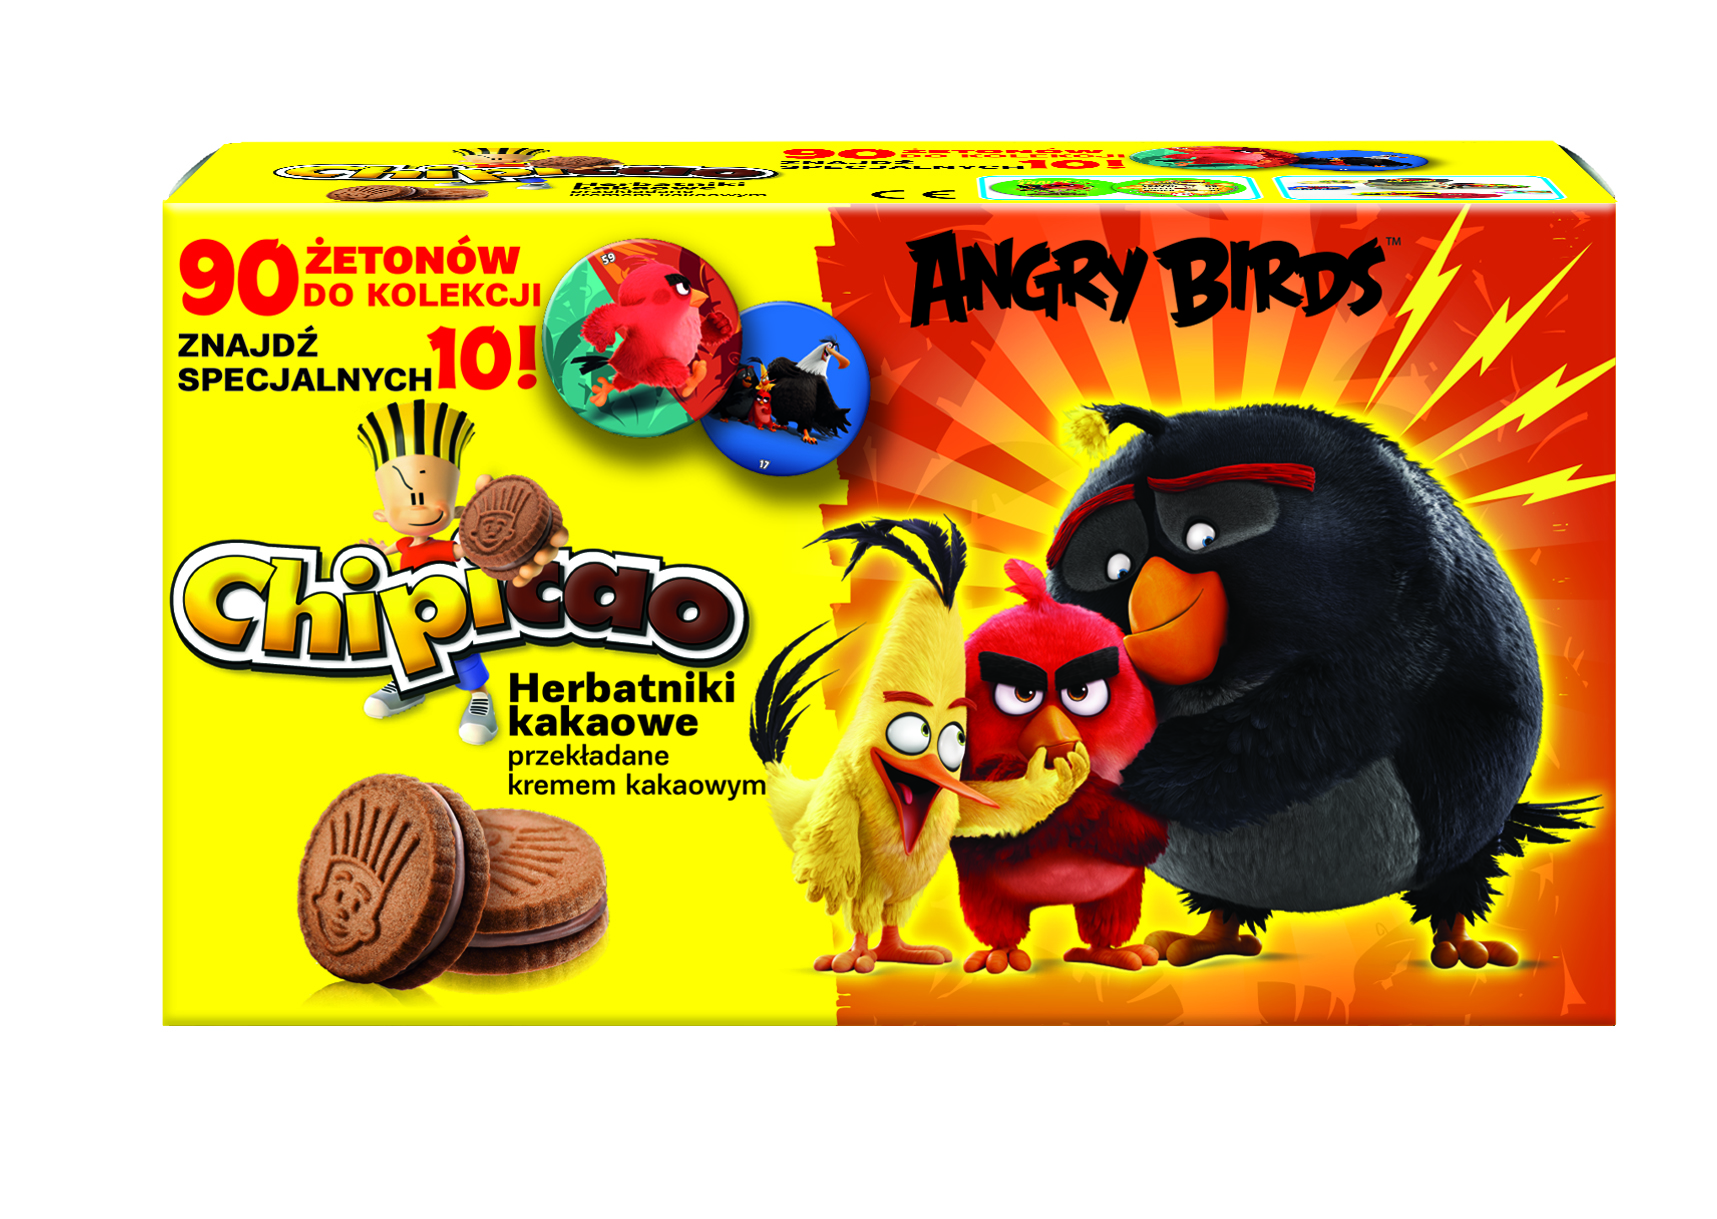 Chipicao i Angry Birds